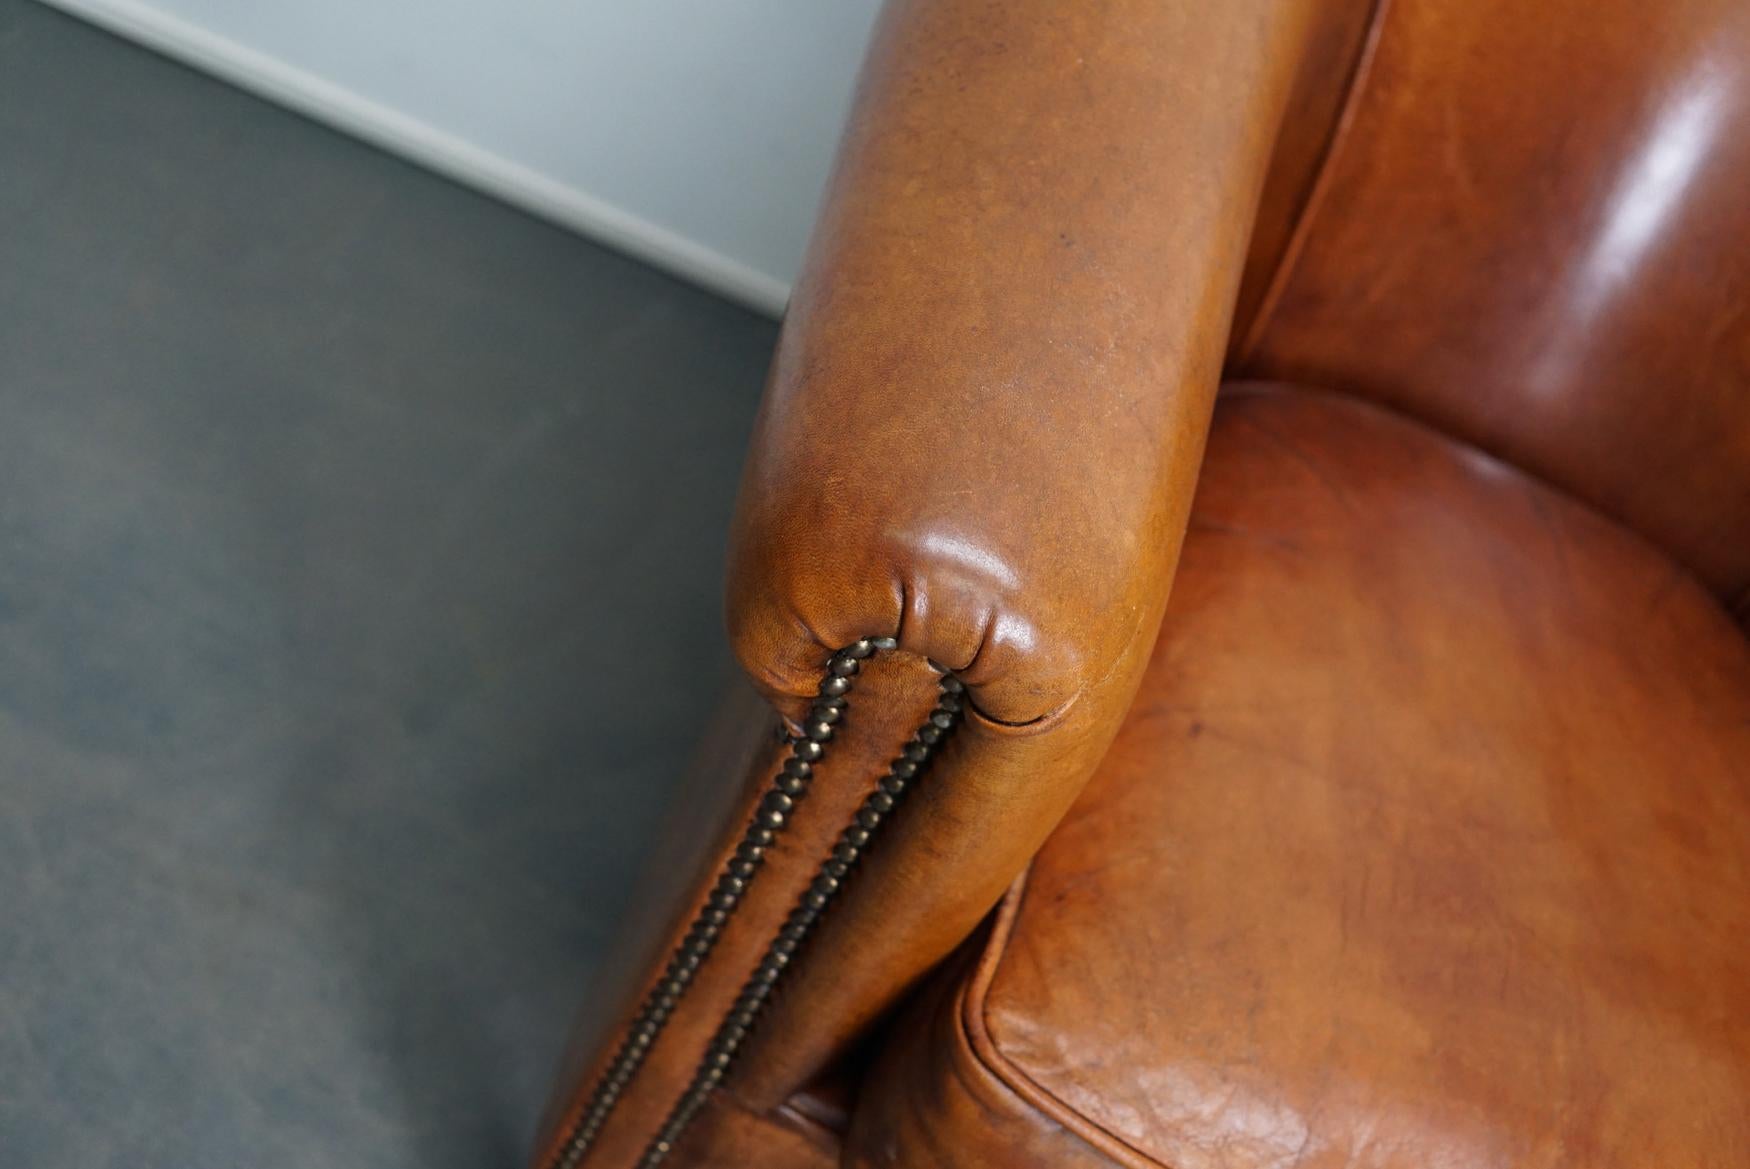 Vintage Dutch Cognac Leather Club Chairs, Set of 2 4